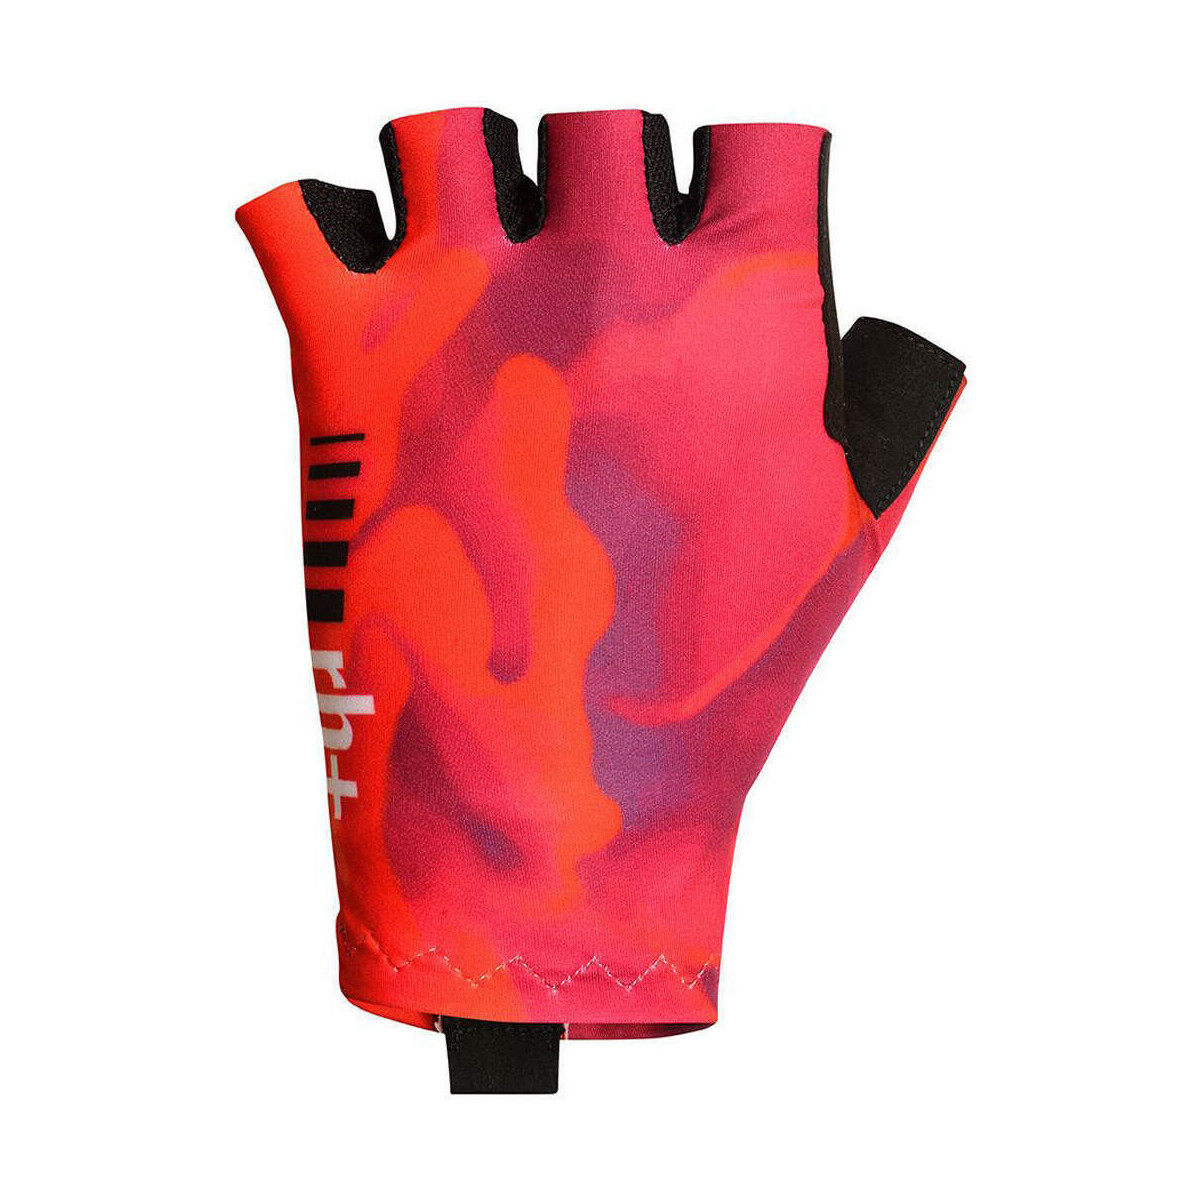 Accesorios textil Guantes Rh+ New Fashion Glove Multicolor